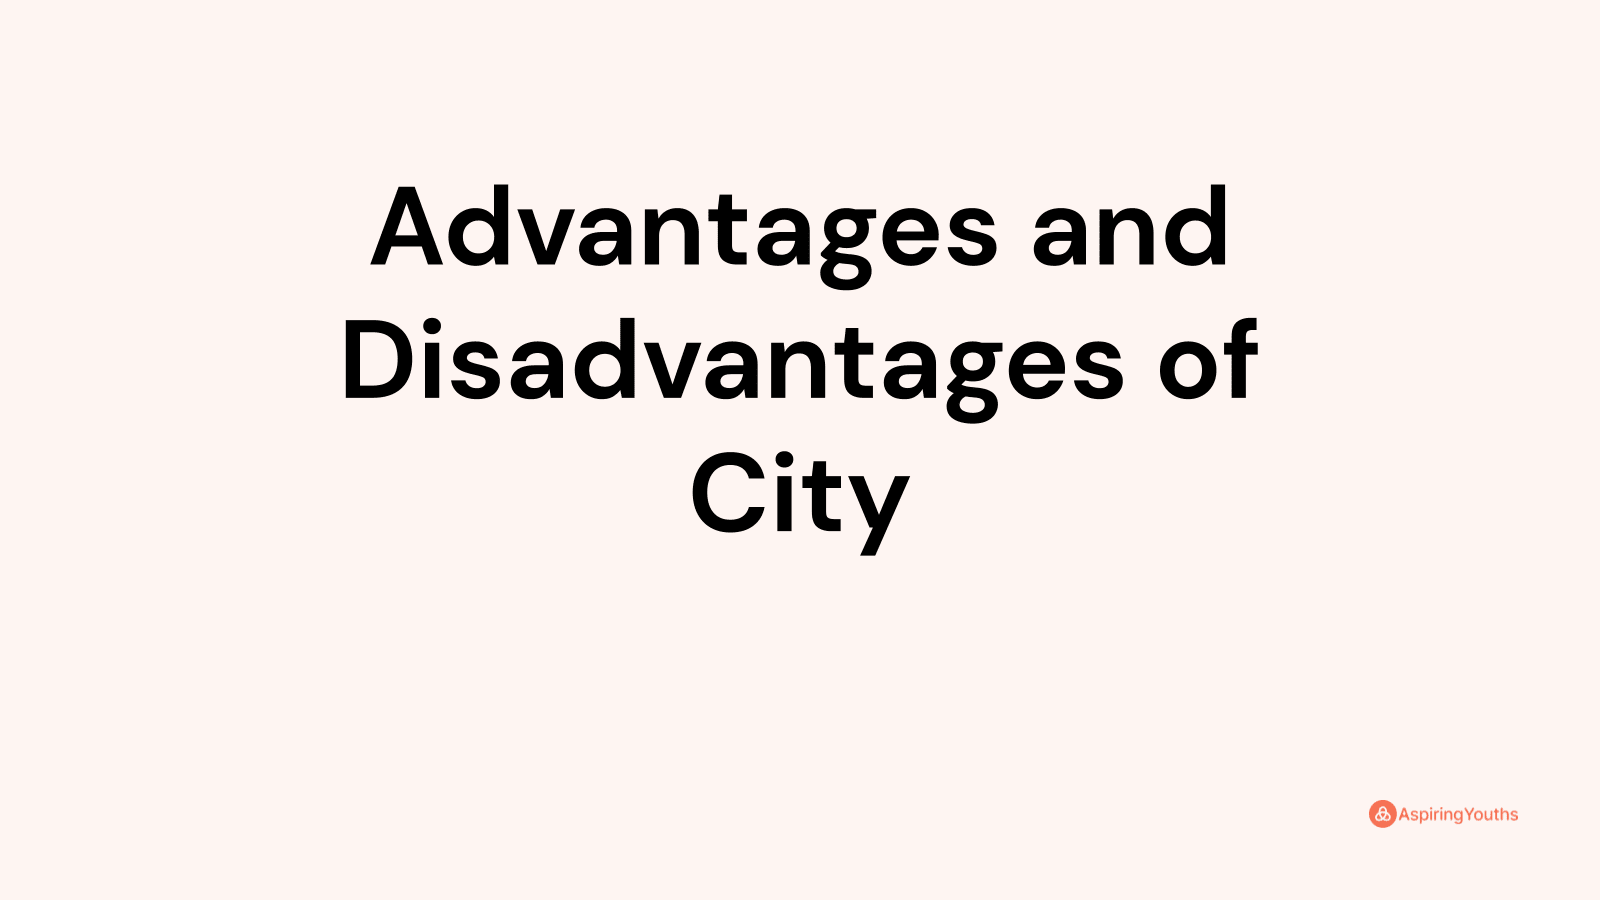 Advantages and disadvantages of City